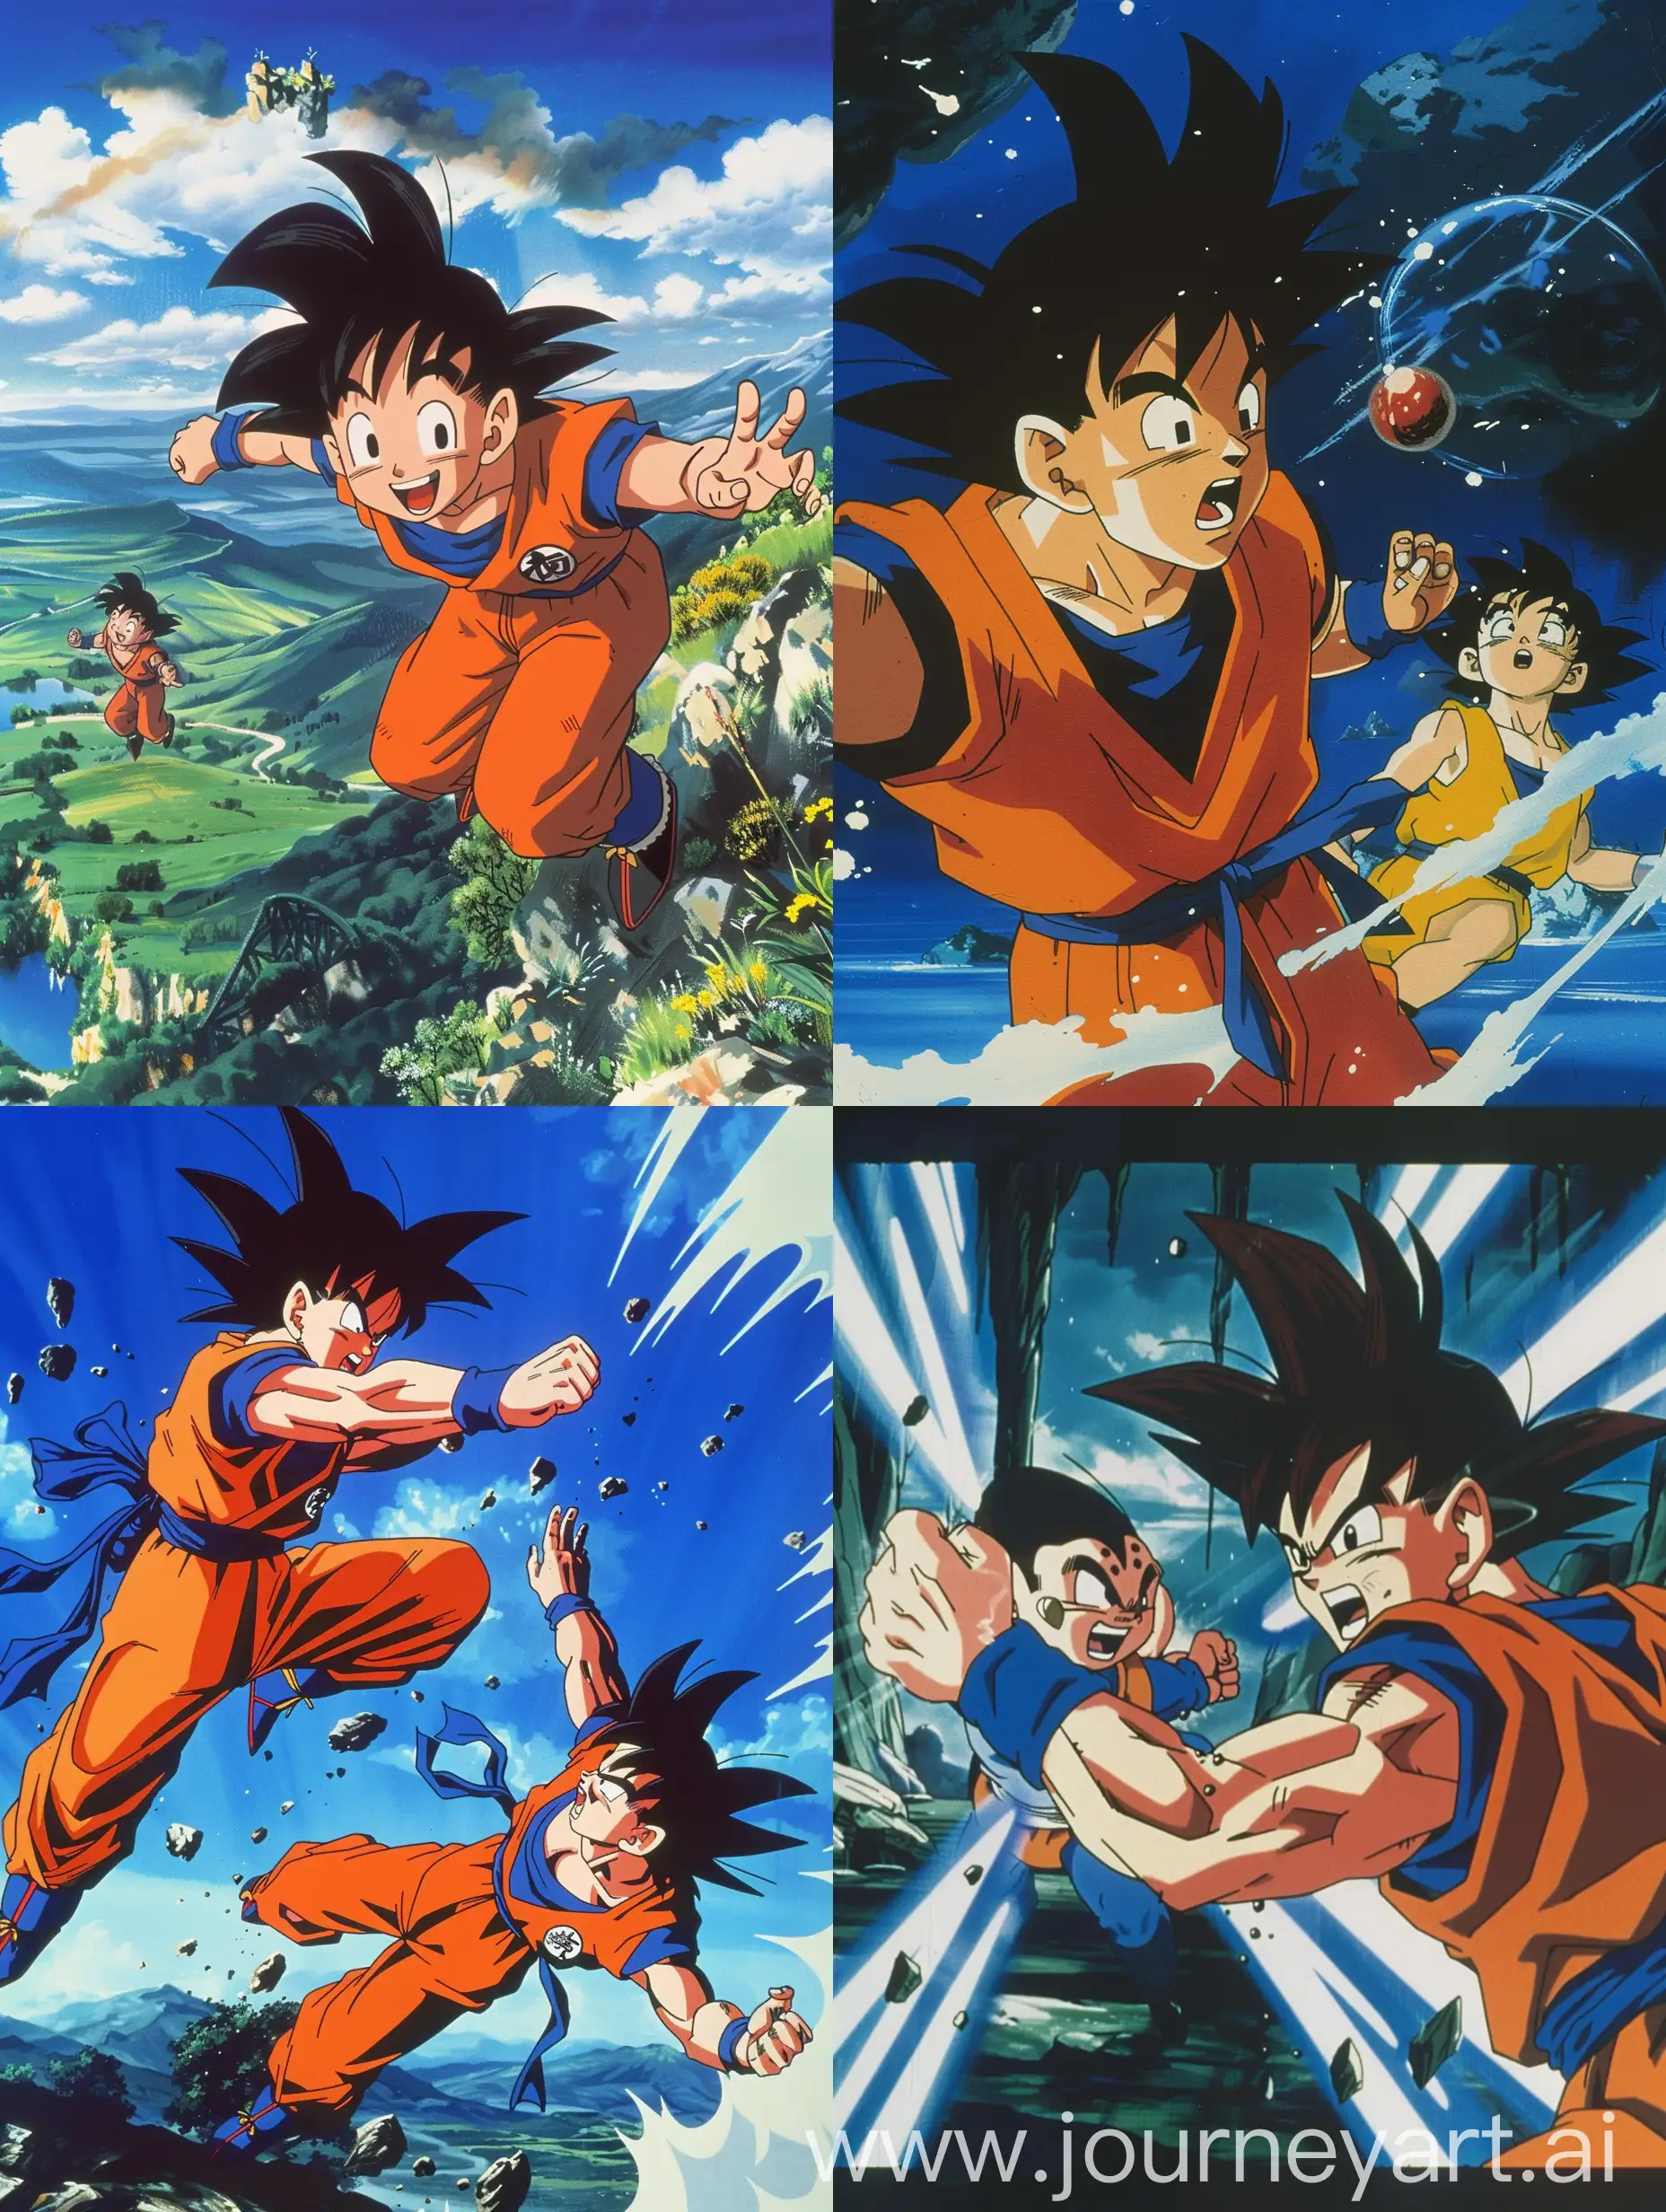 Epic-Battle-Goku-vs-Naruto-in-Classic-Anime-Film-Style